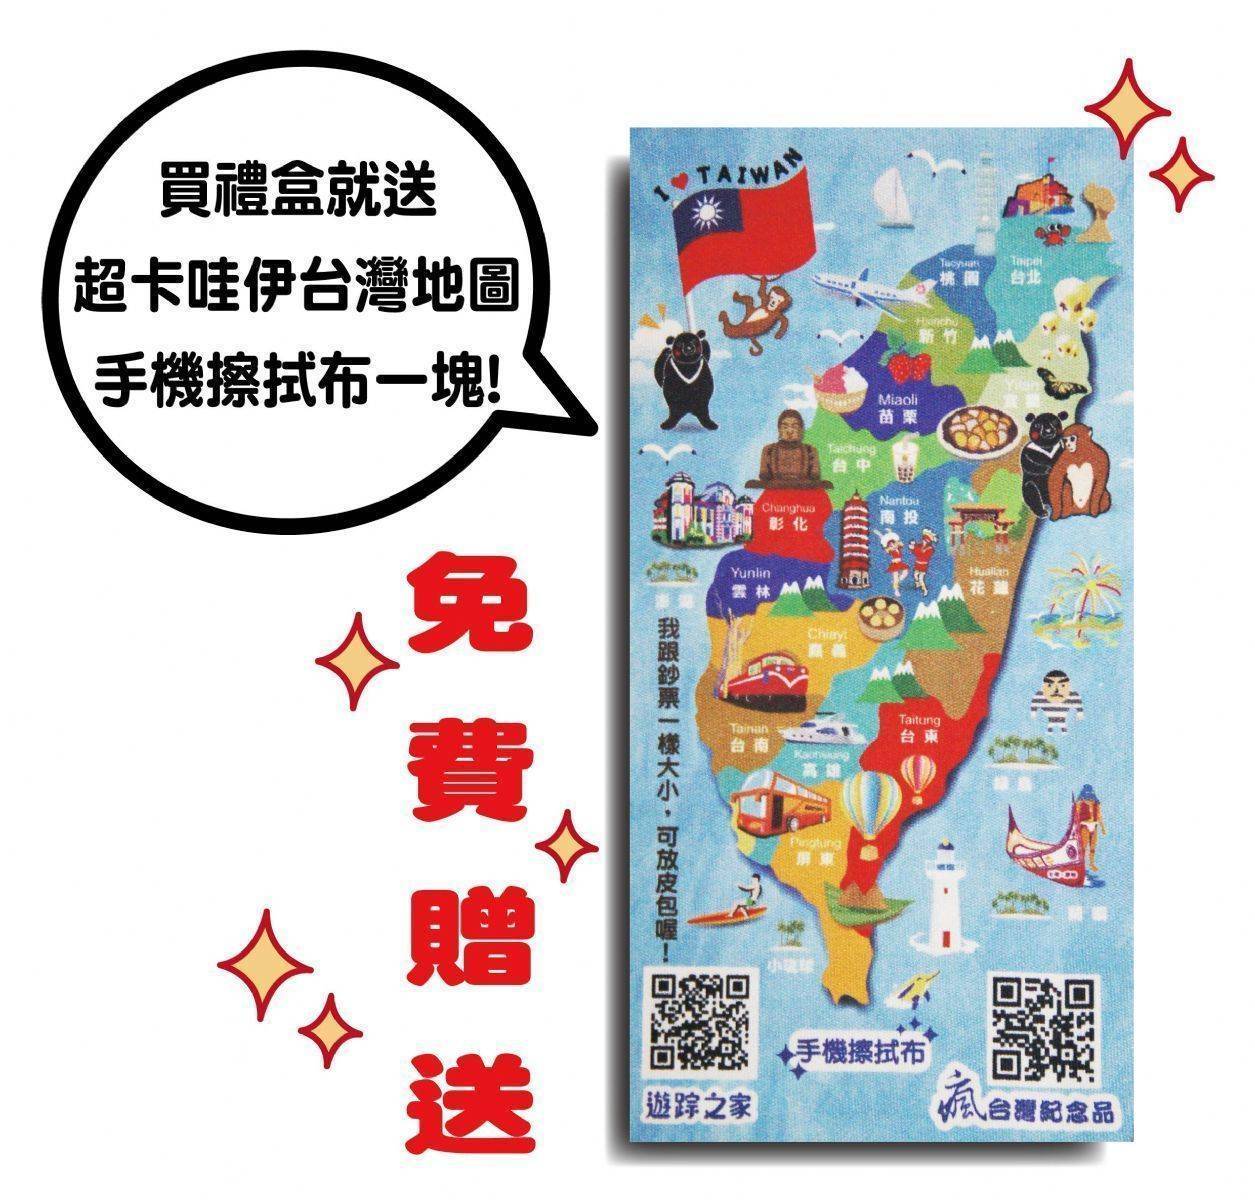 A002夜光版愛台北旅遊磁鐵禮盒(3入)